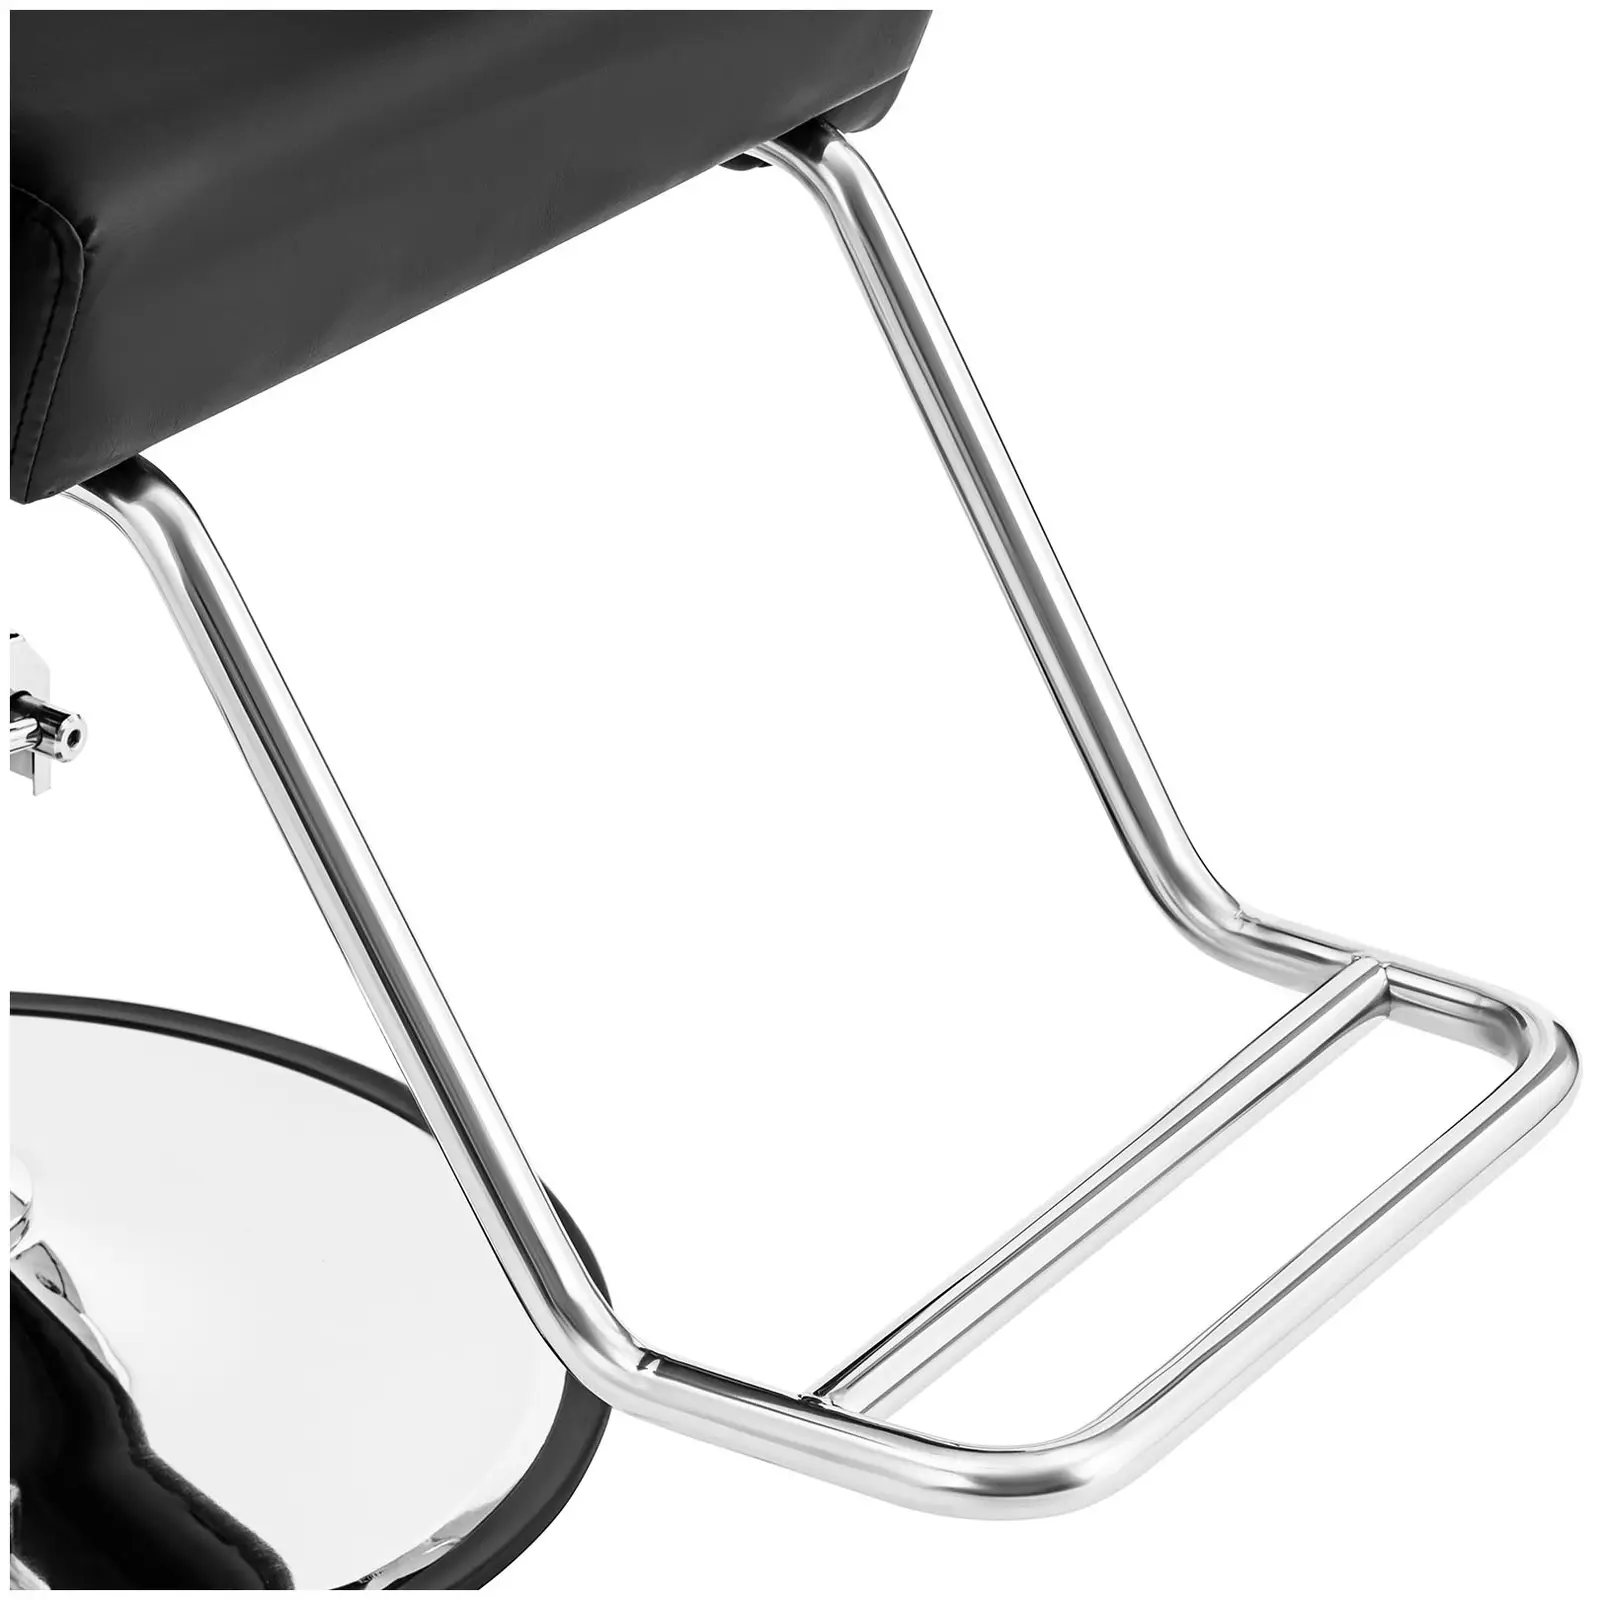 Salon Chair with footrest - 990 - 1140 mm - 200 kg - Dudley Black